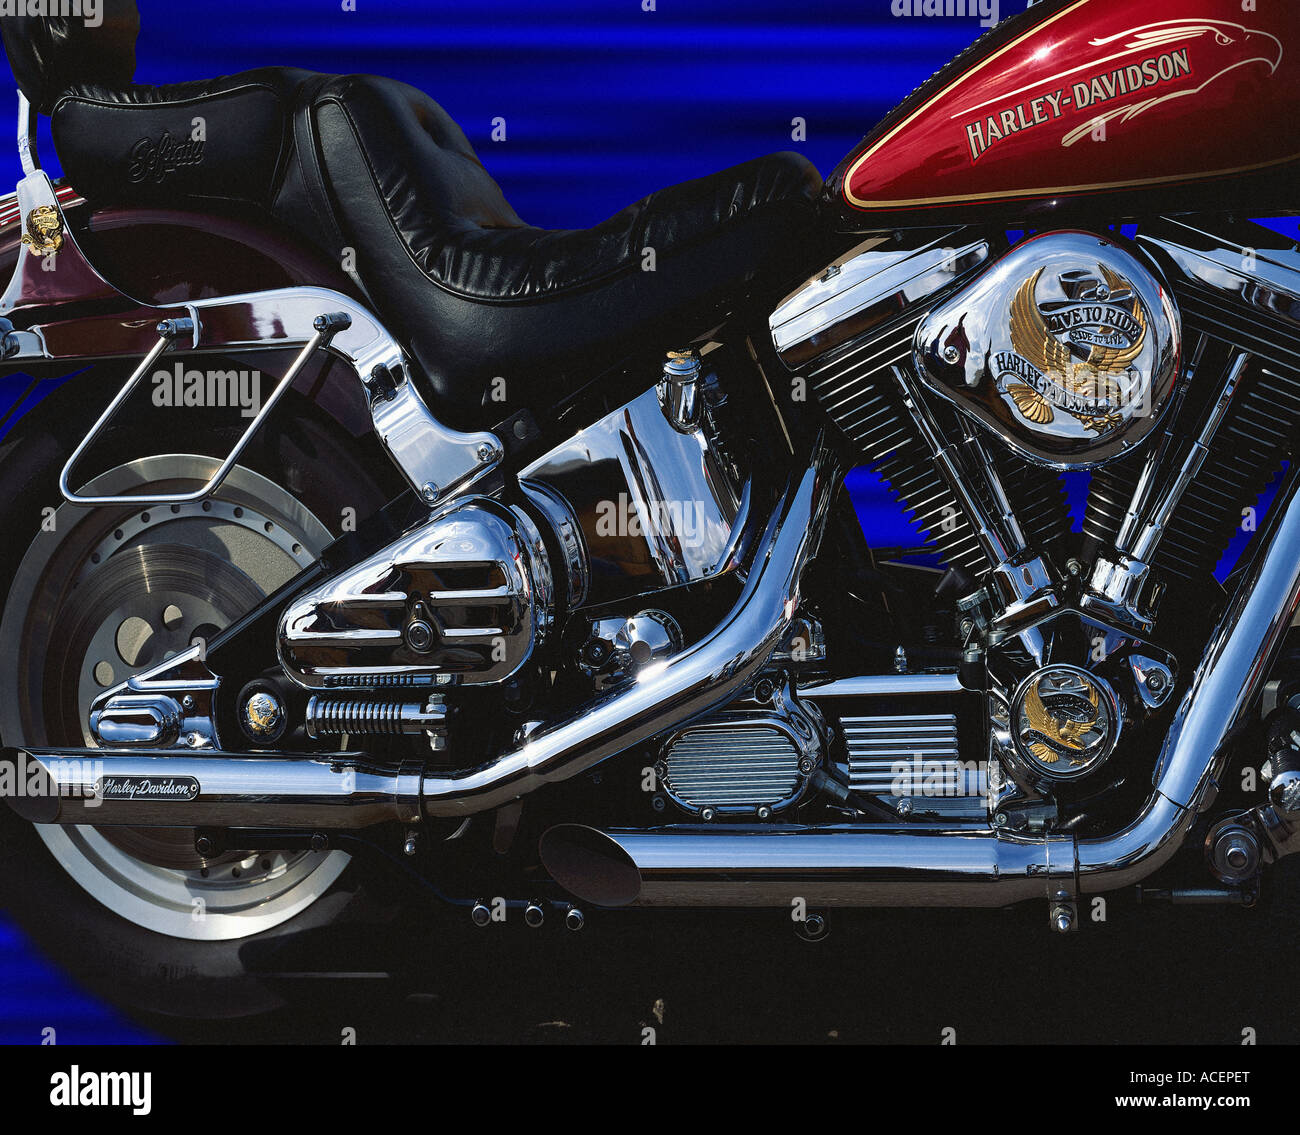 PHOTO ART:  Harley Davidson Stock Photo